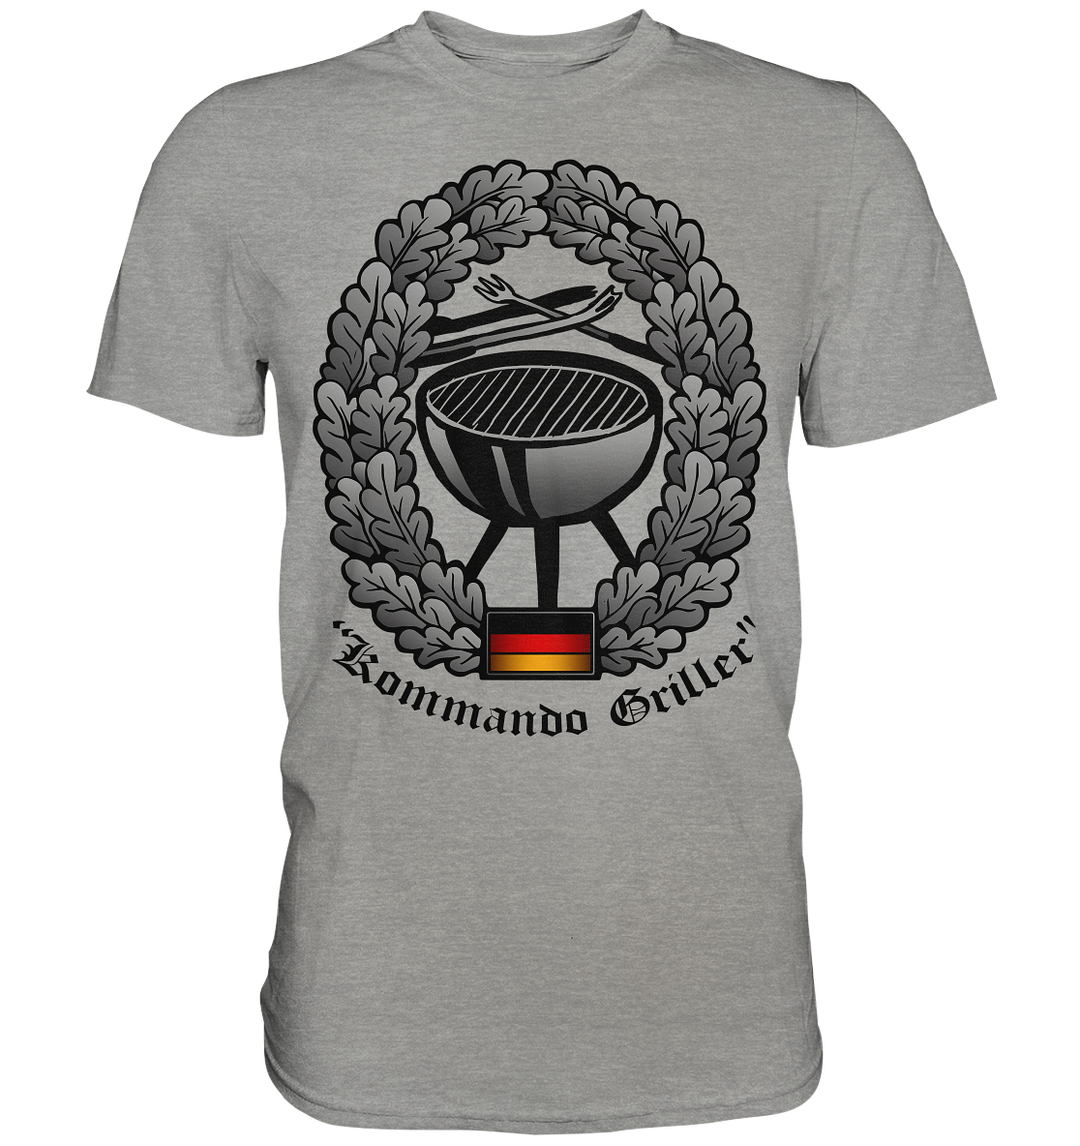 "Kommando Griller"  - Premium Shirt